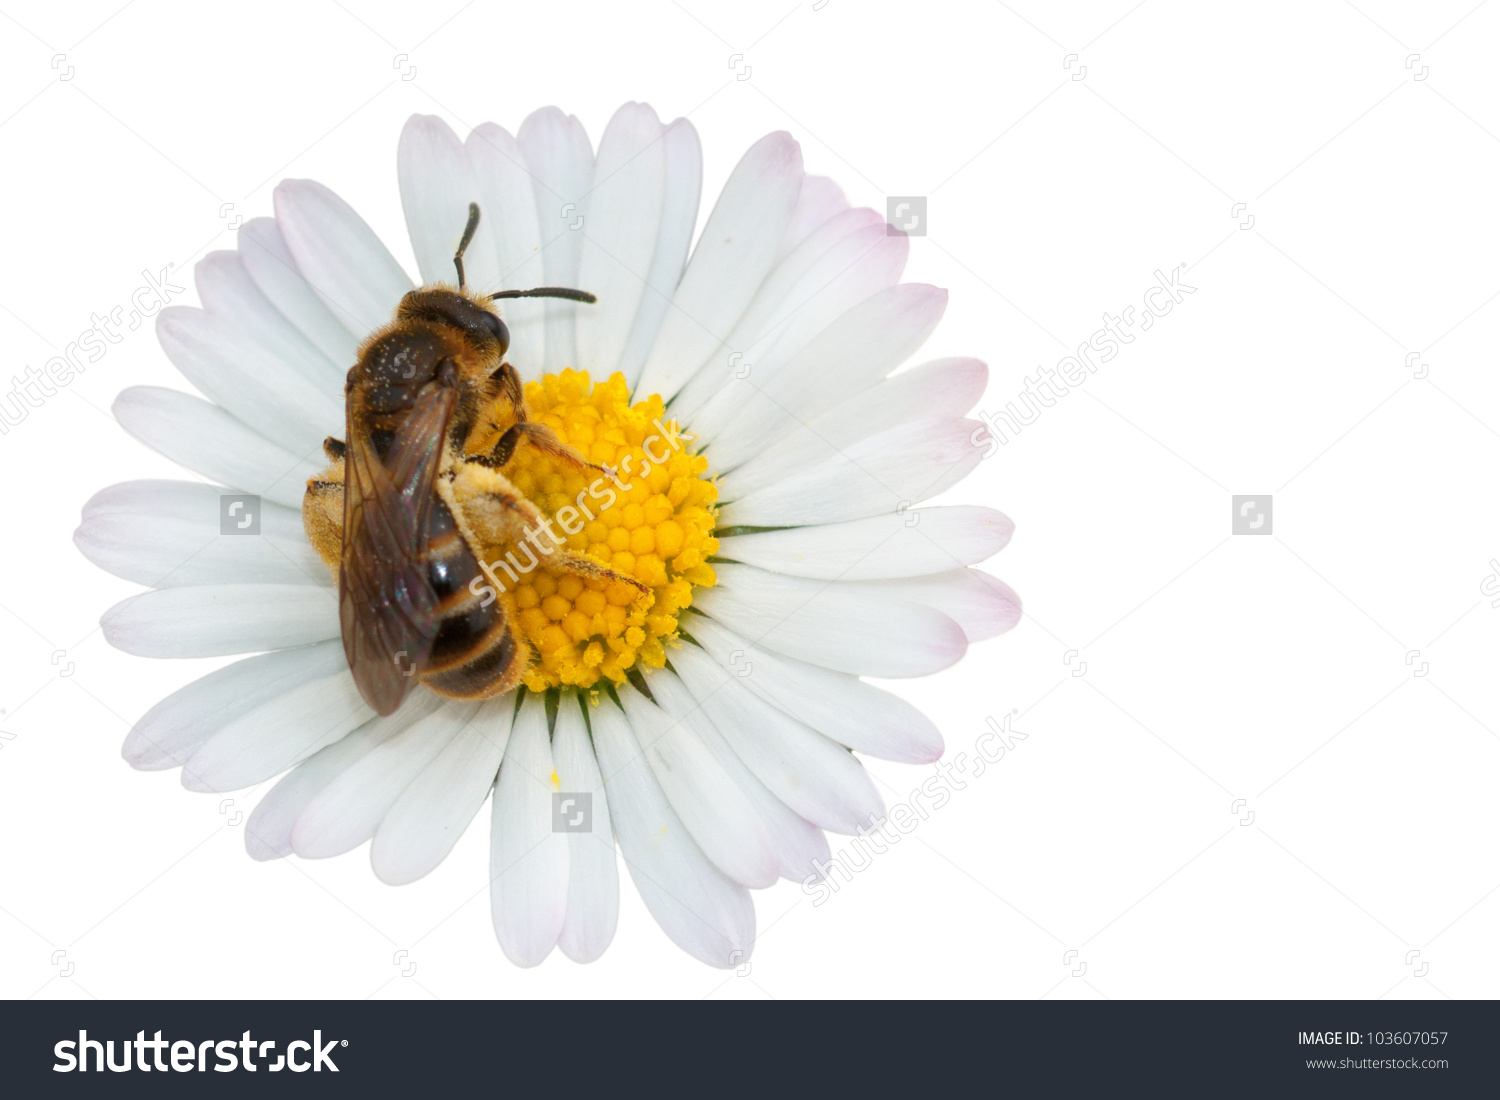 clipart of a nectar flower